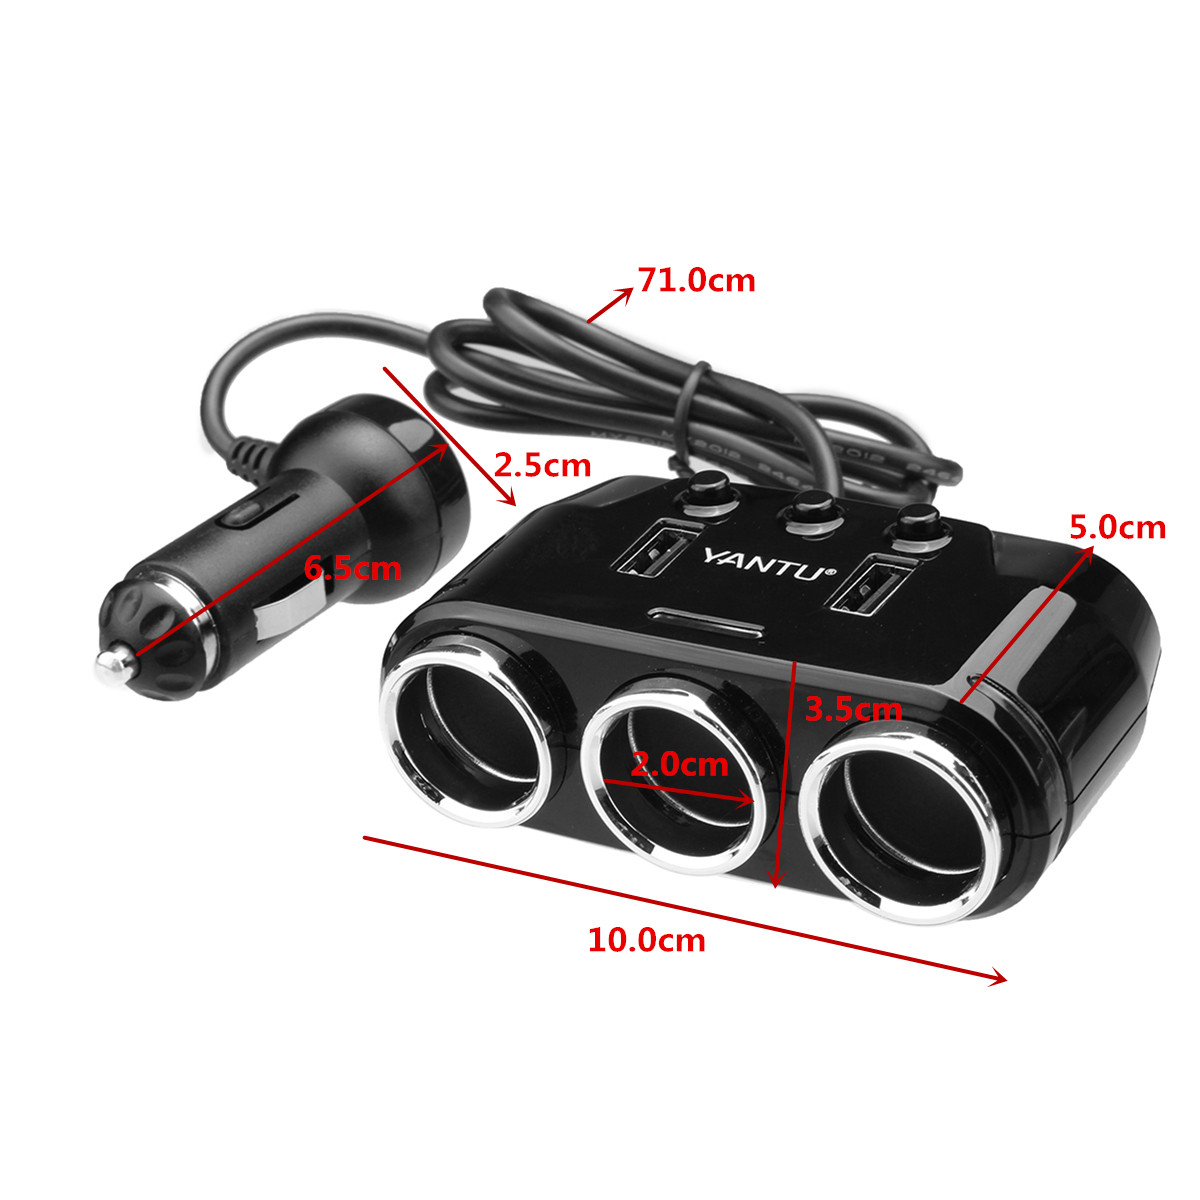 Dual USB Port 3 Way Auto Charger Car Ci garette Lighter Full Function Socket Splitter Adapter 13